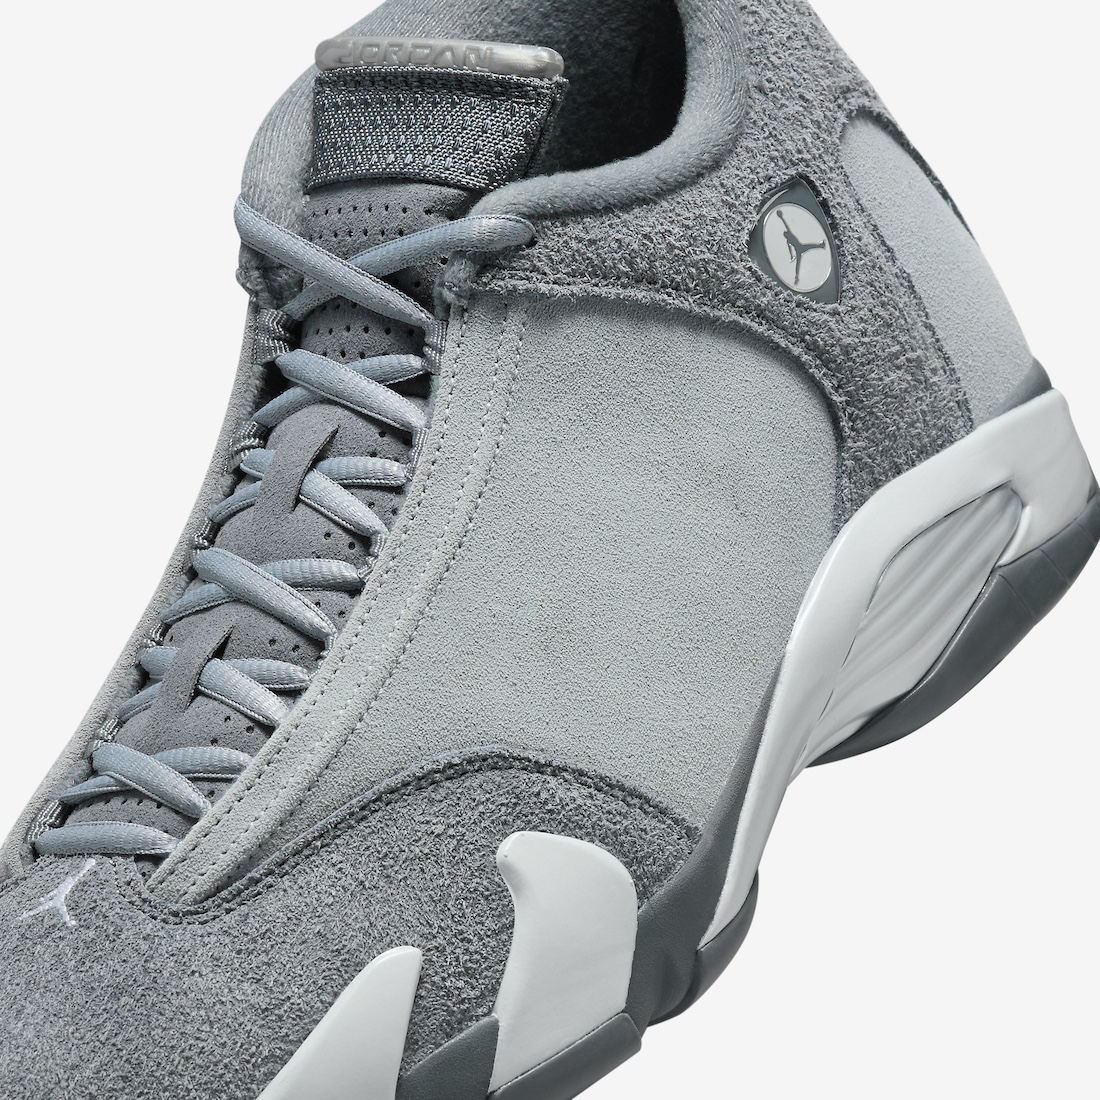 Official Look At The Air Jordan 14 Retro “Flint Grey”